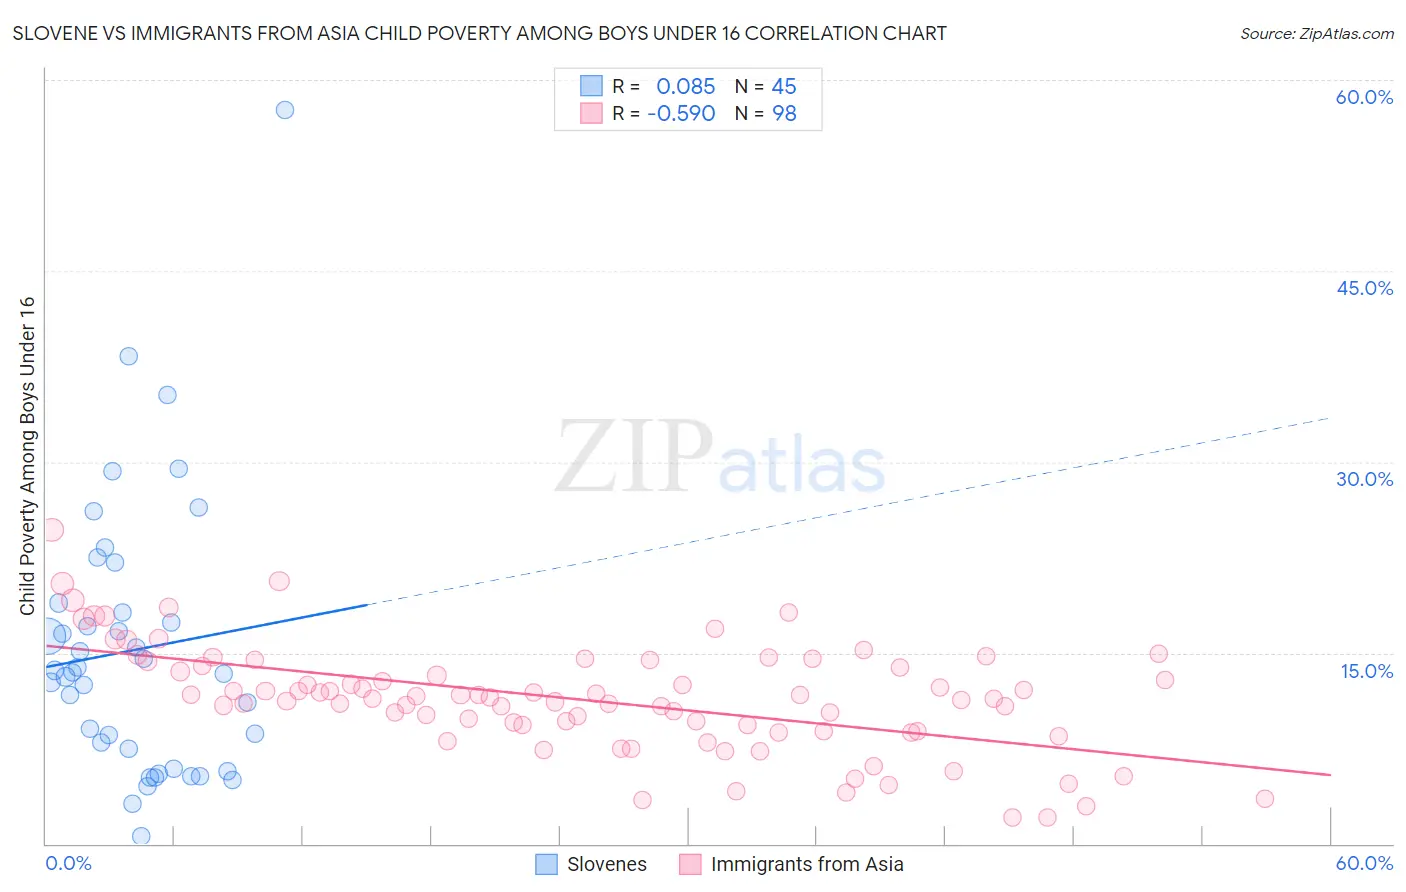 Slovene vs Immigrants from Asia Child Poverty Among Boys Under 16